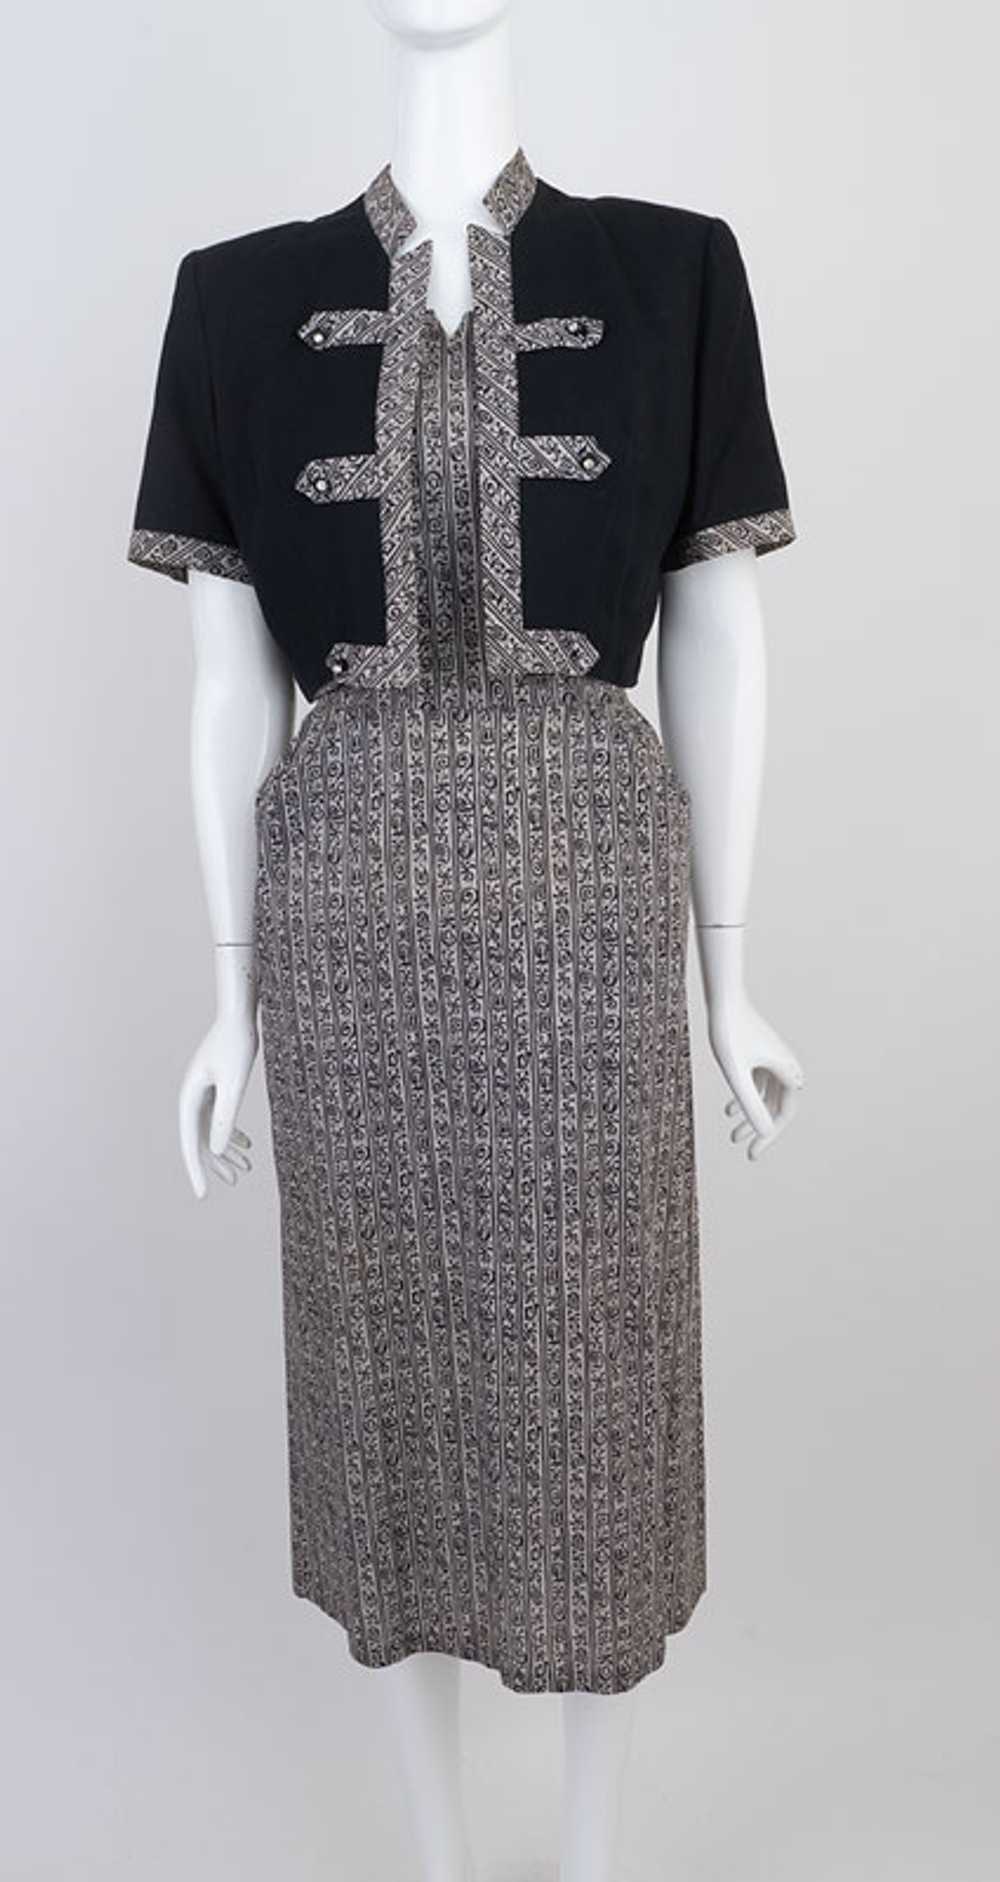 Fab 1950s Novelty Print Dress - image 1